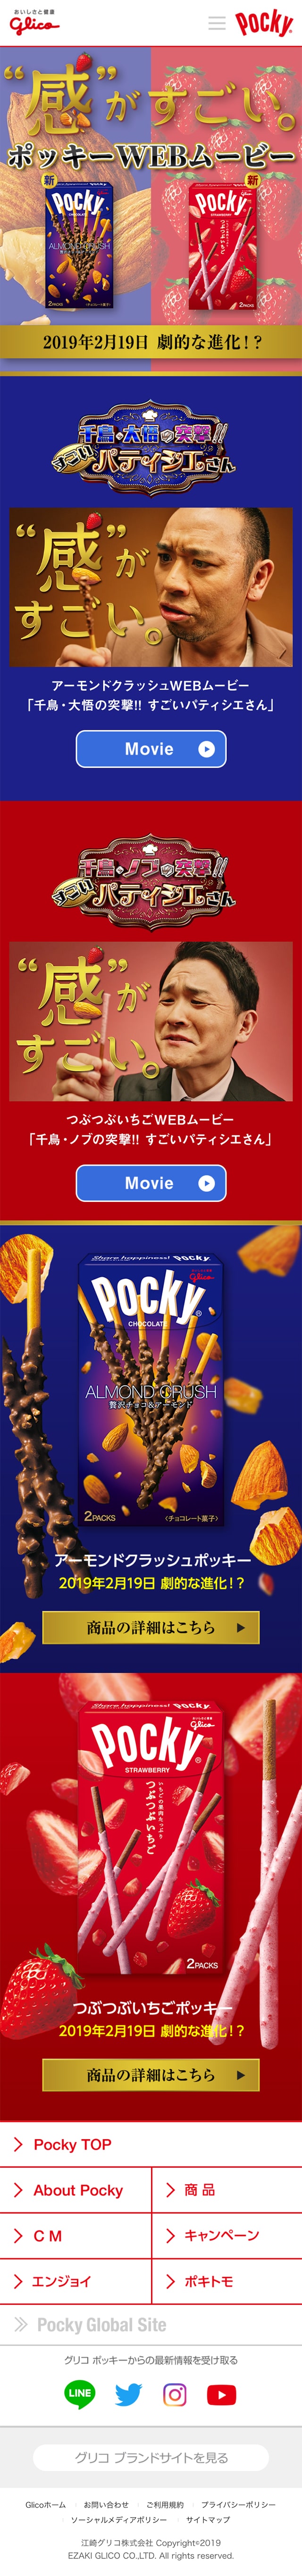 Pocky_sp_1